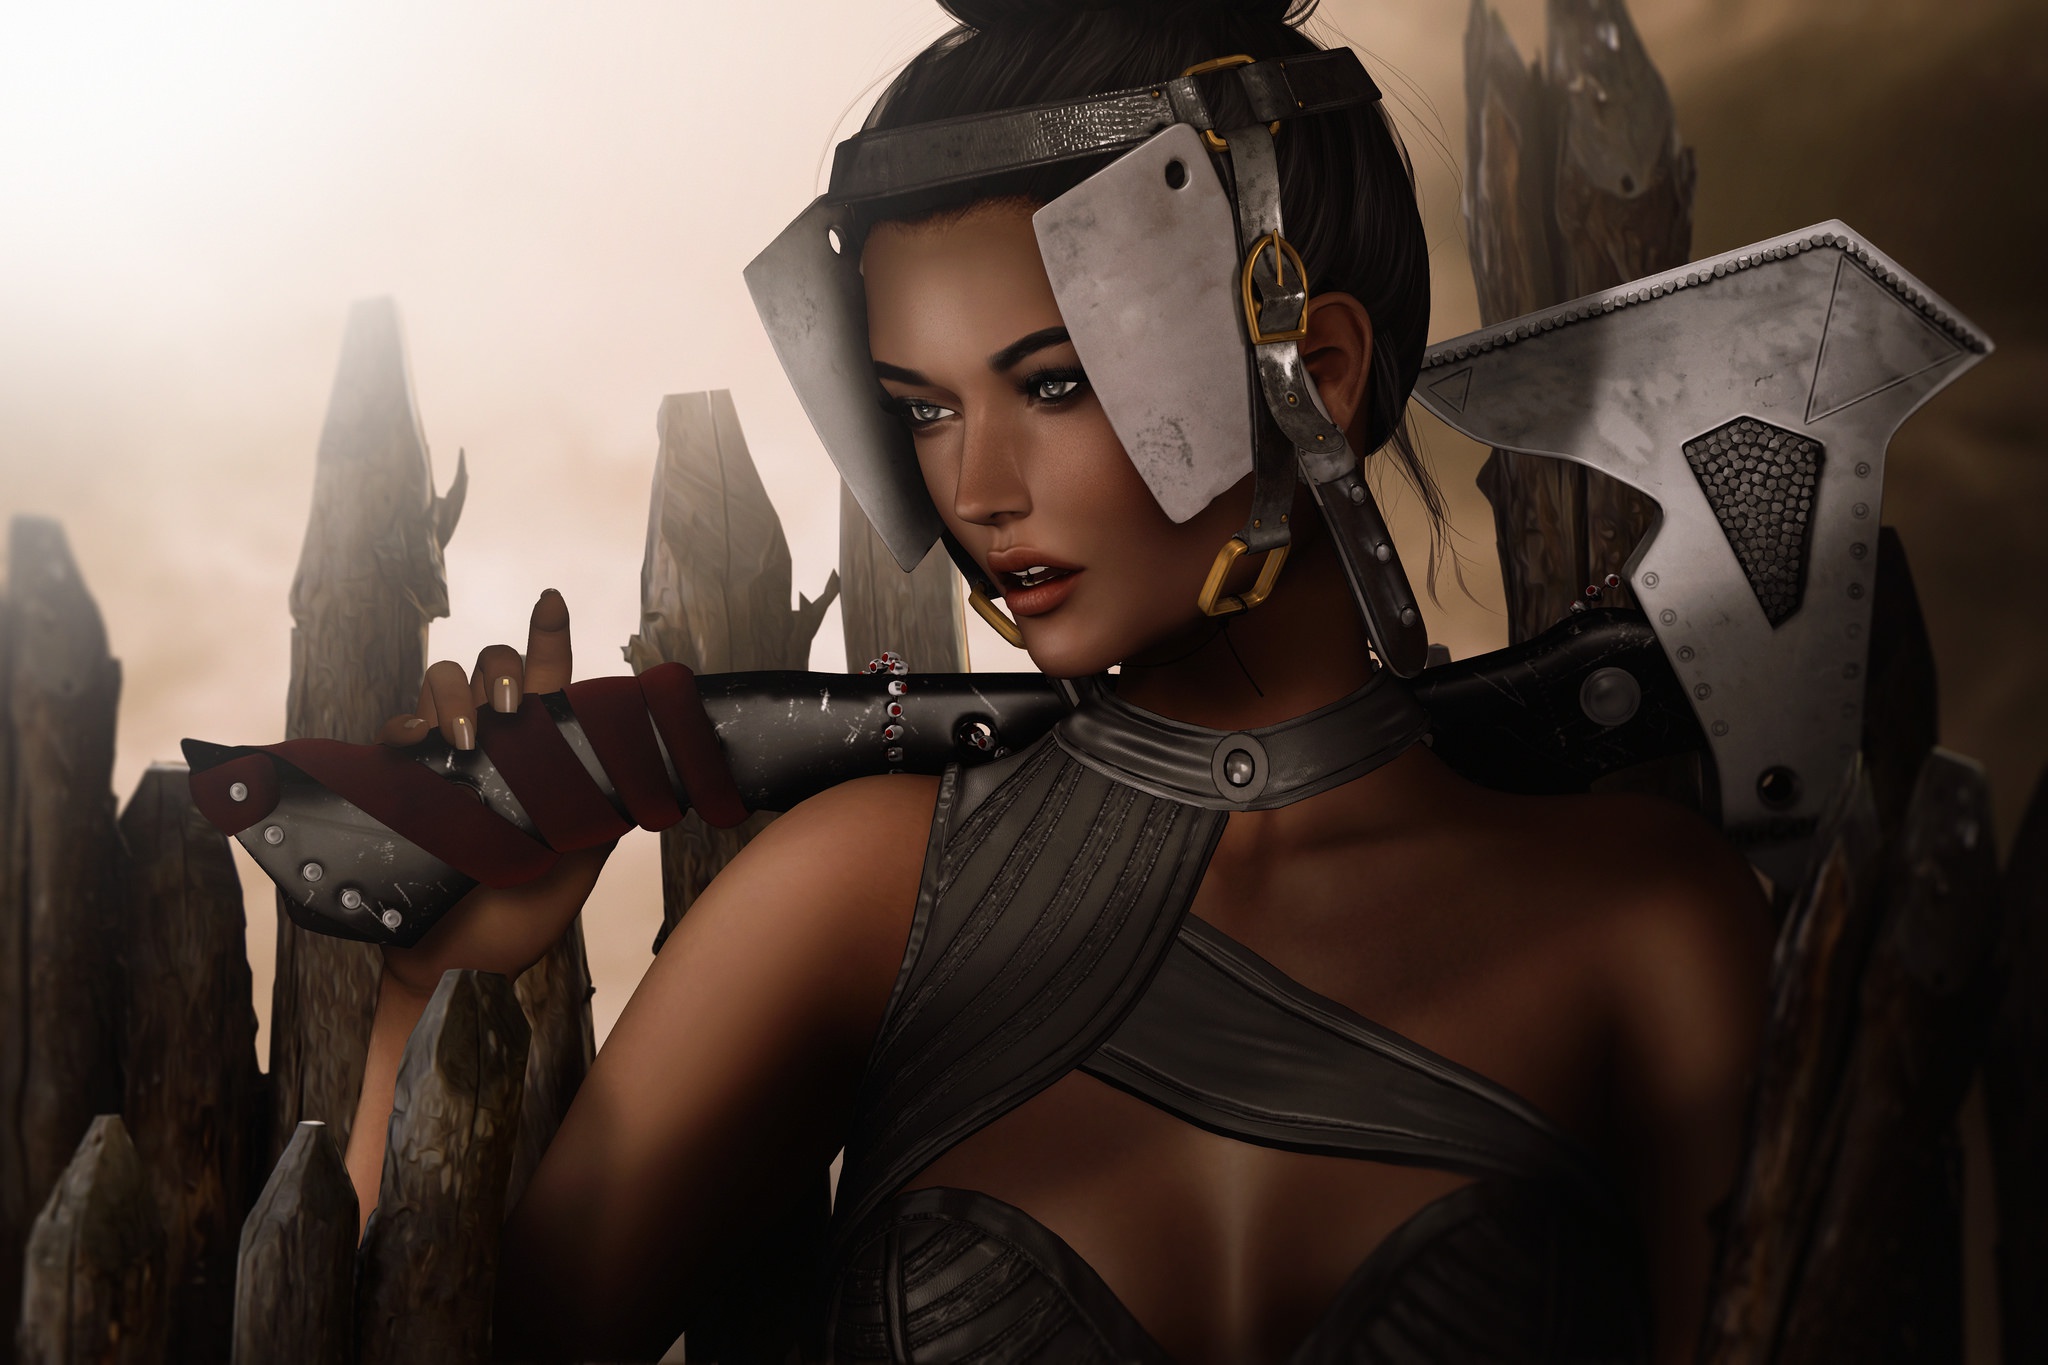 General 2048x1365 fantasy art warrior fantasy girl battle axe